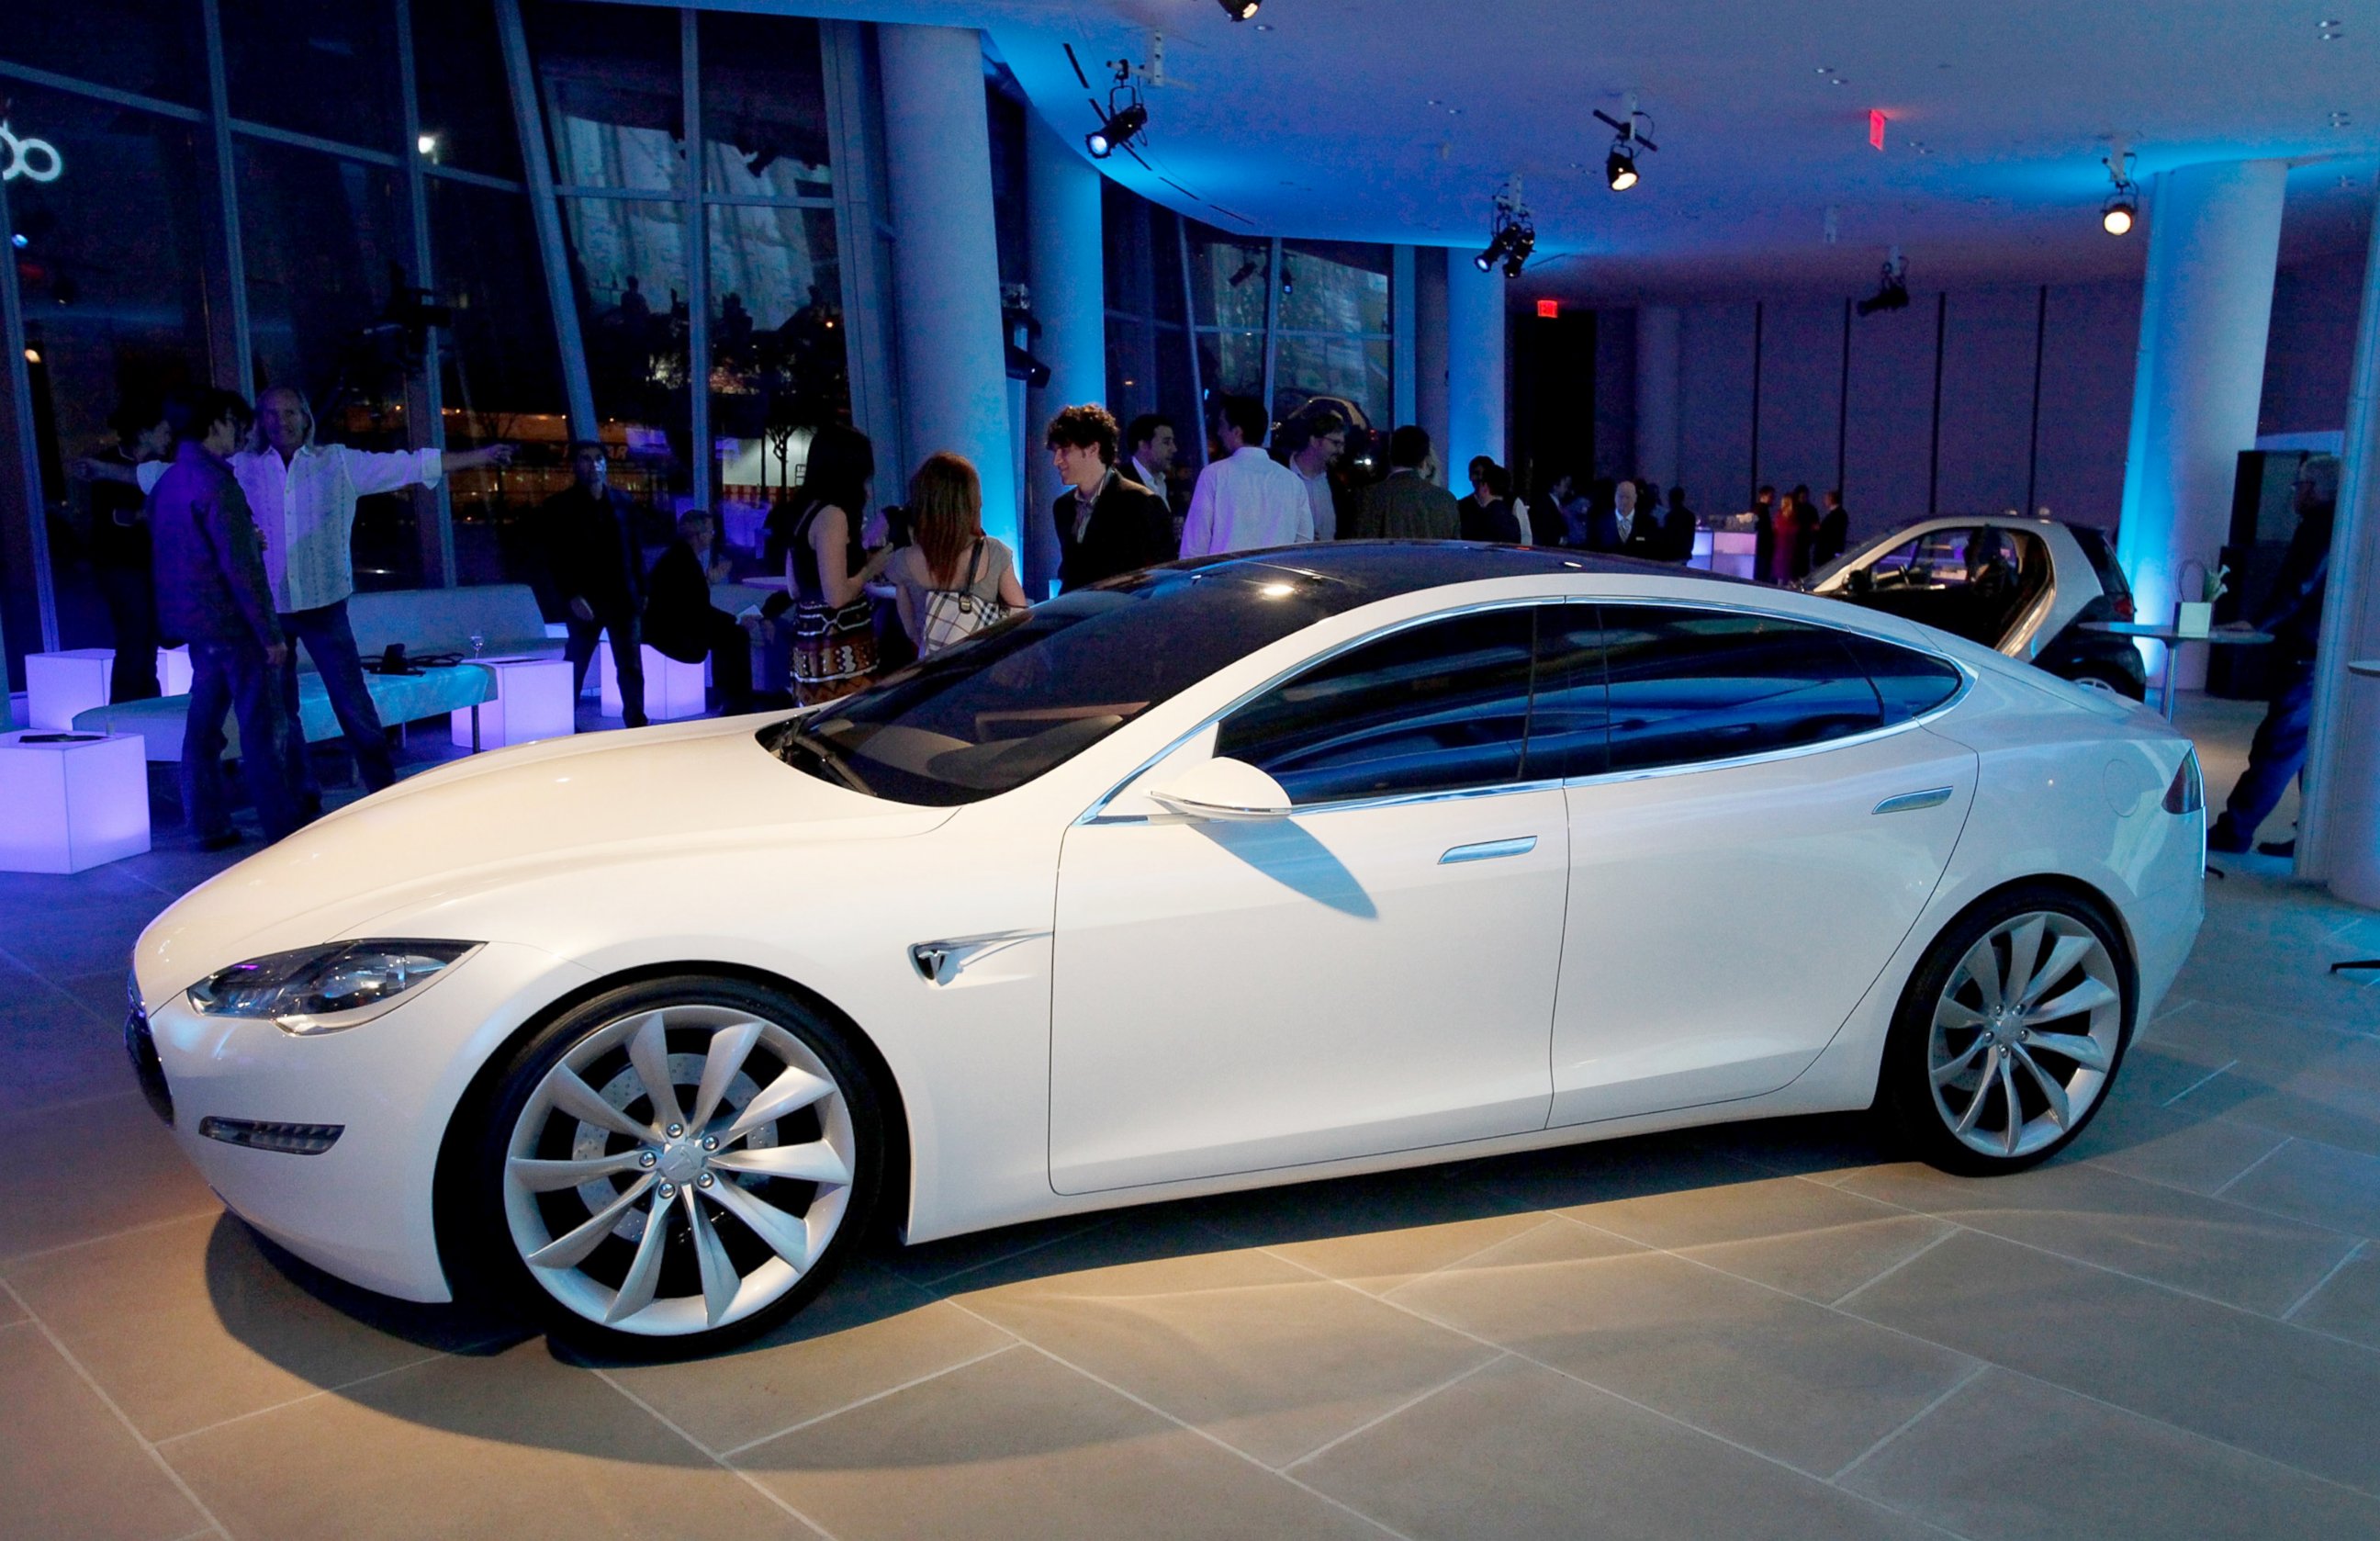 PHOTO: The Tesla S series, April 29, 2009, in New York City.